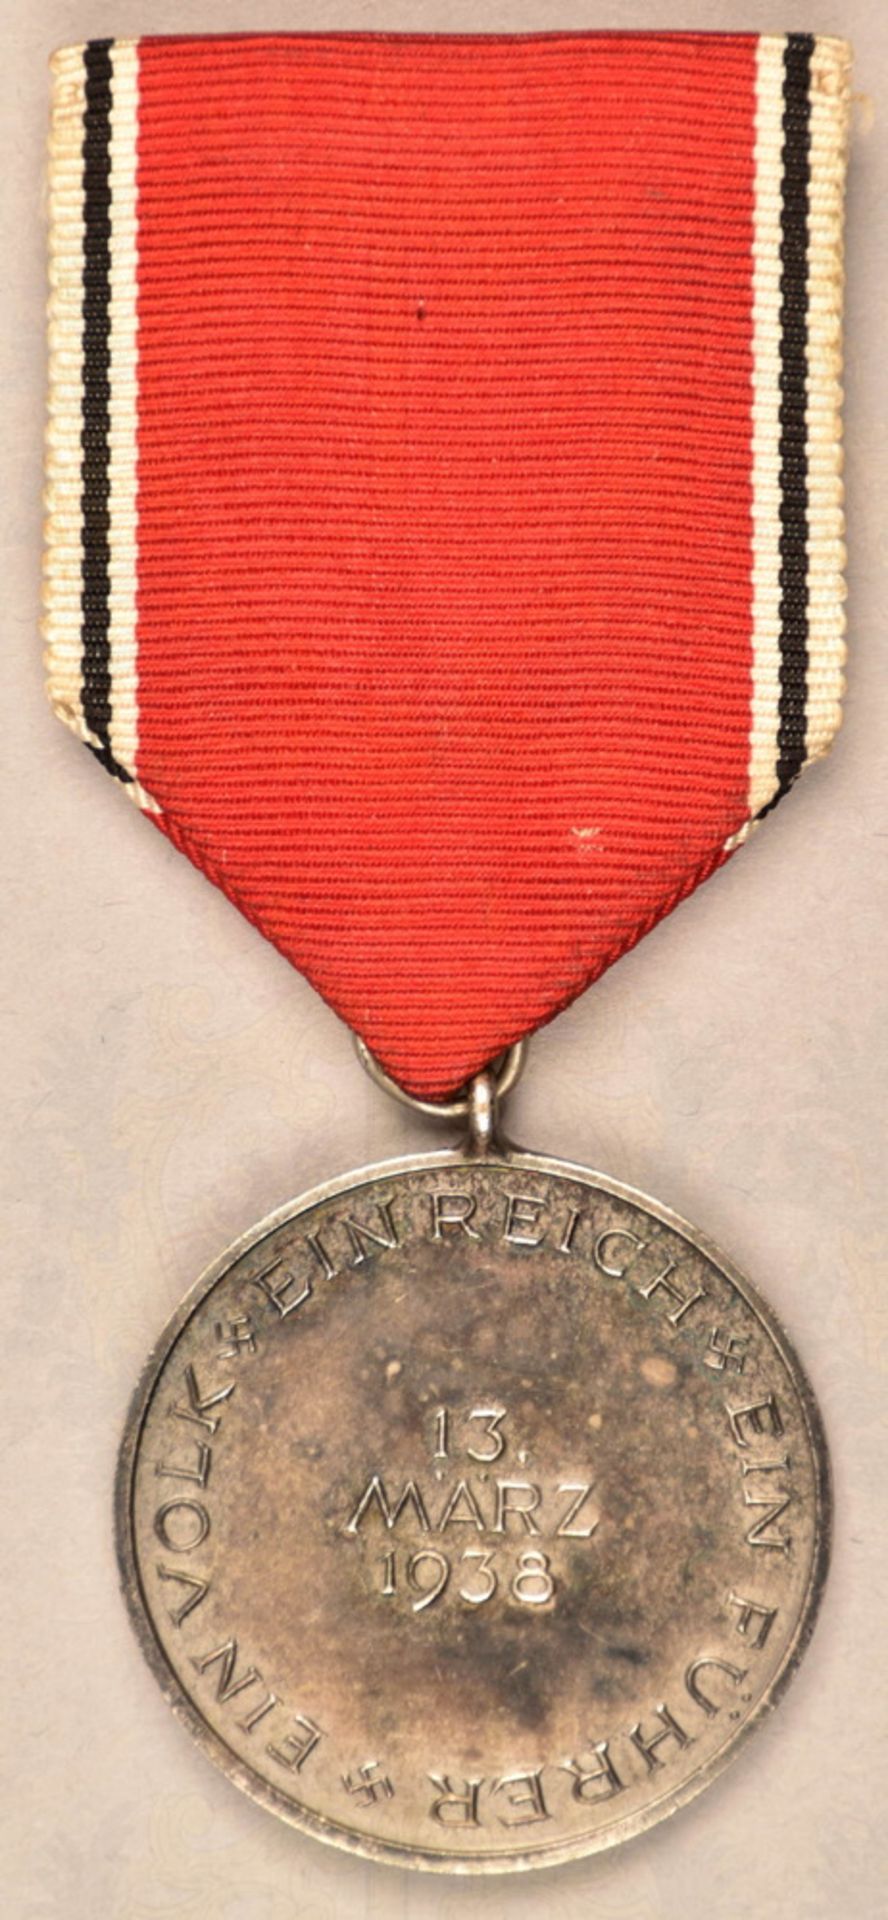 Medaille 13. März 1938 mit Verleihungsurkunde - Image 2 of 3